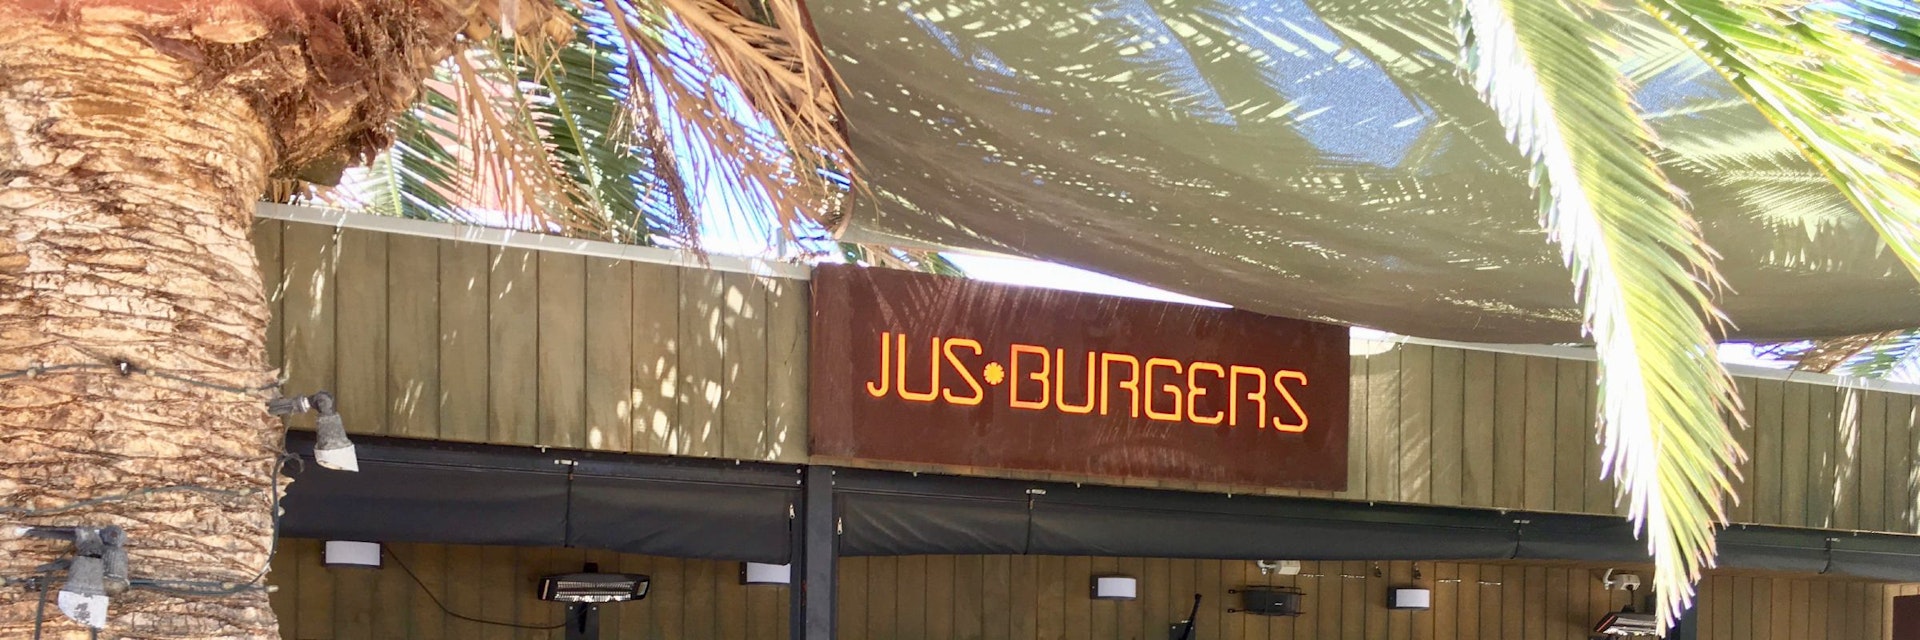 Jus Burgers frontage, Subiaco.